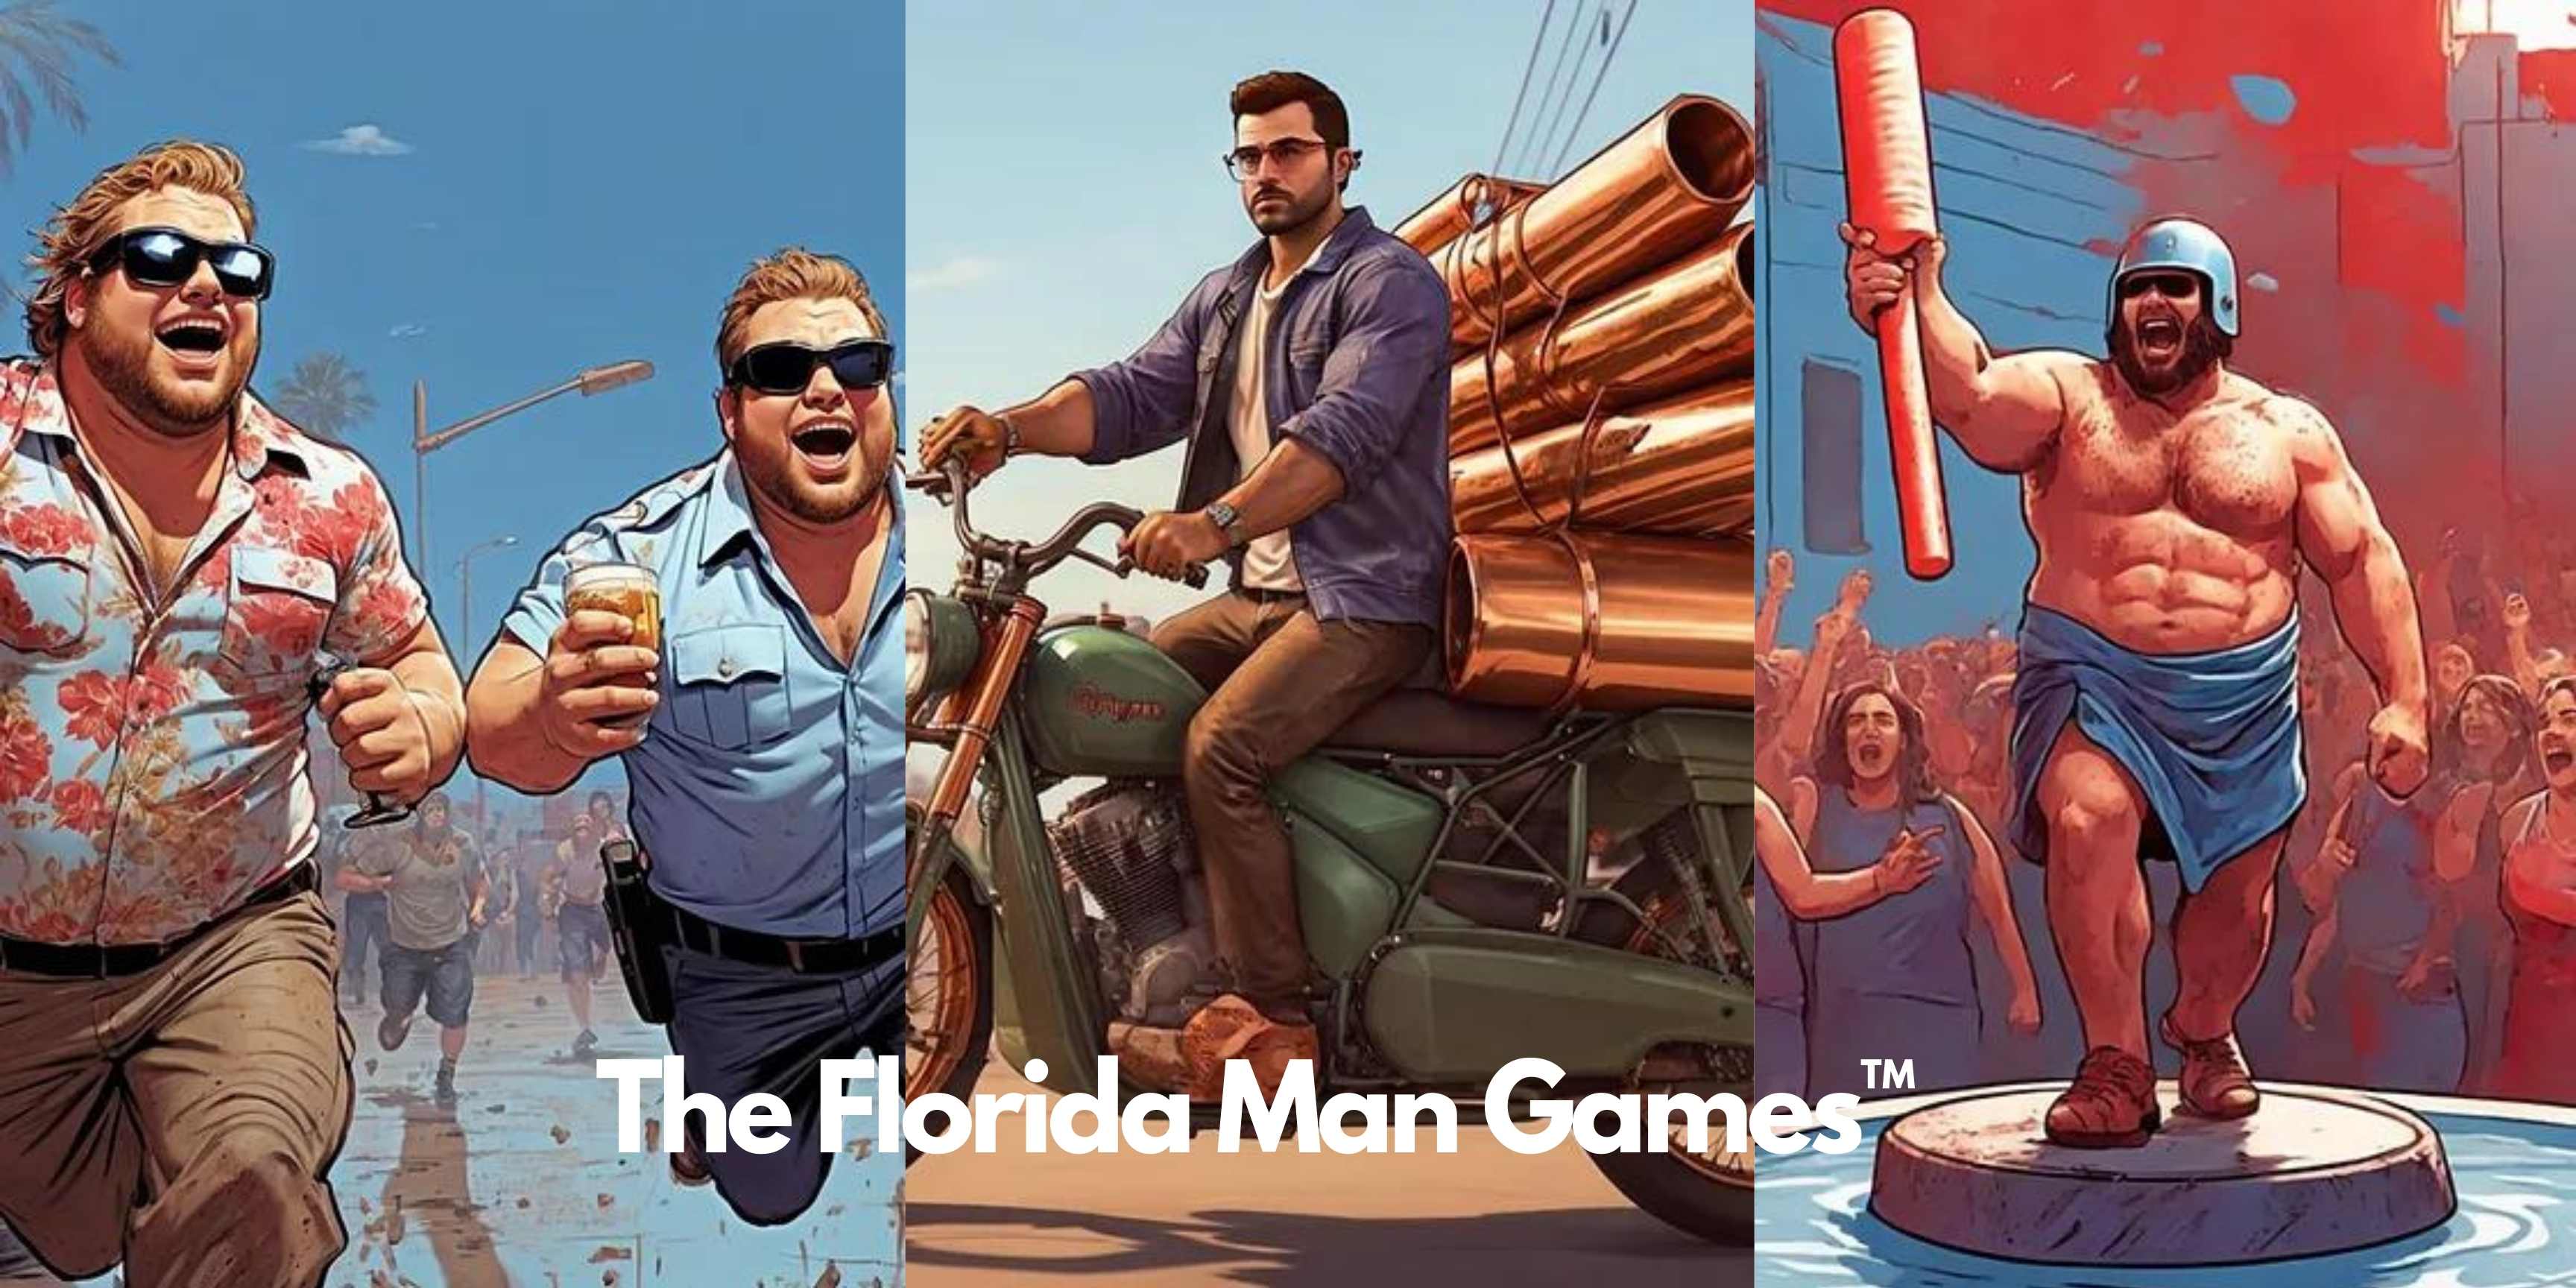 The Florida Man Games™ Poke Fun at Florida